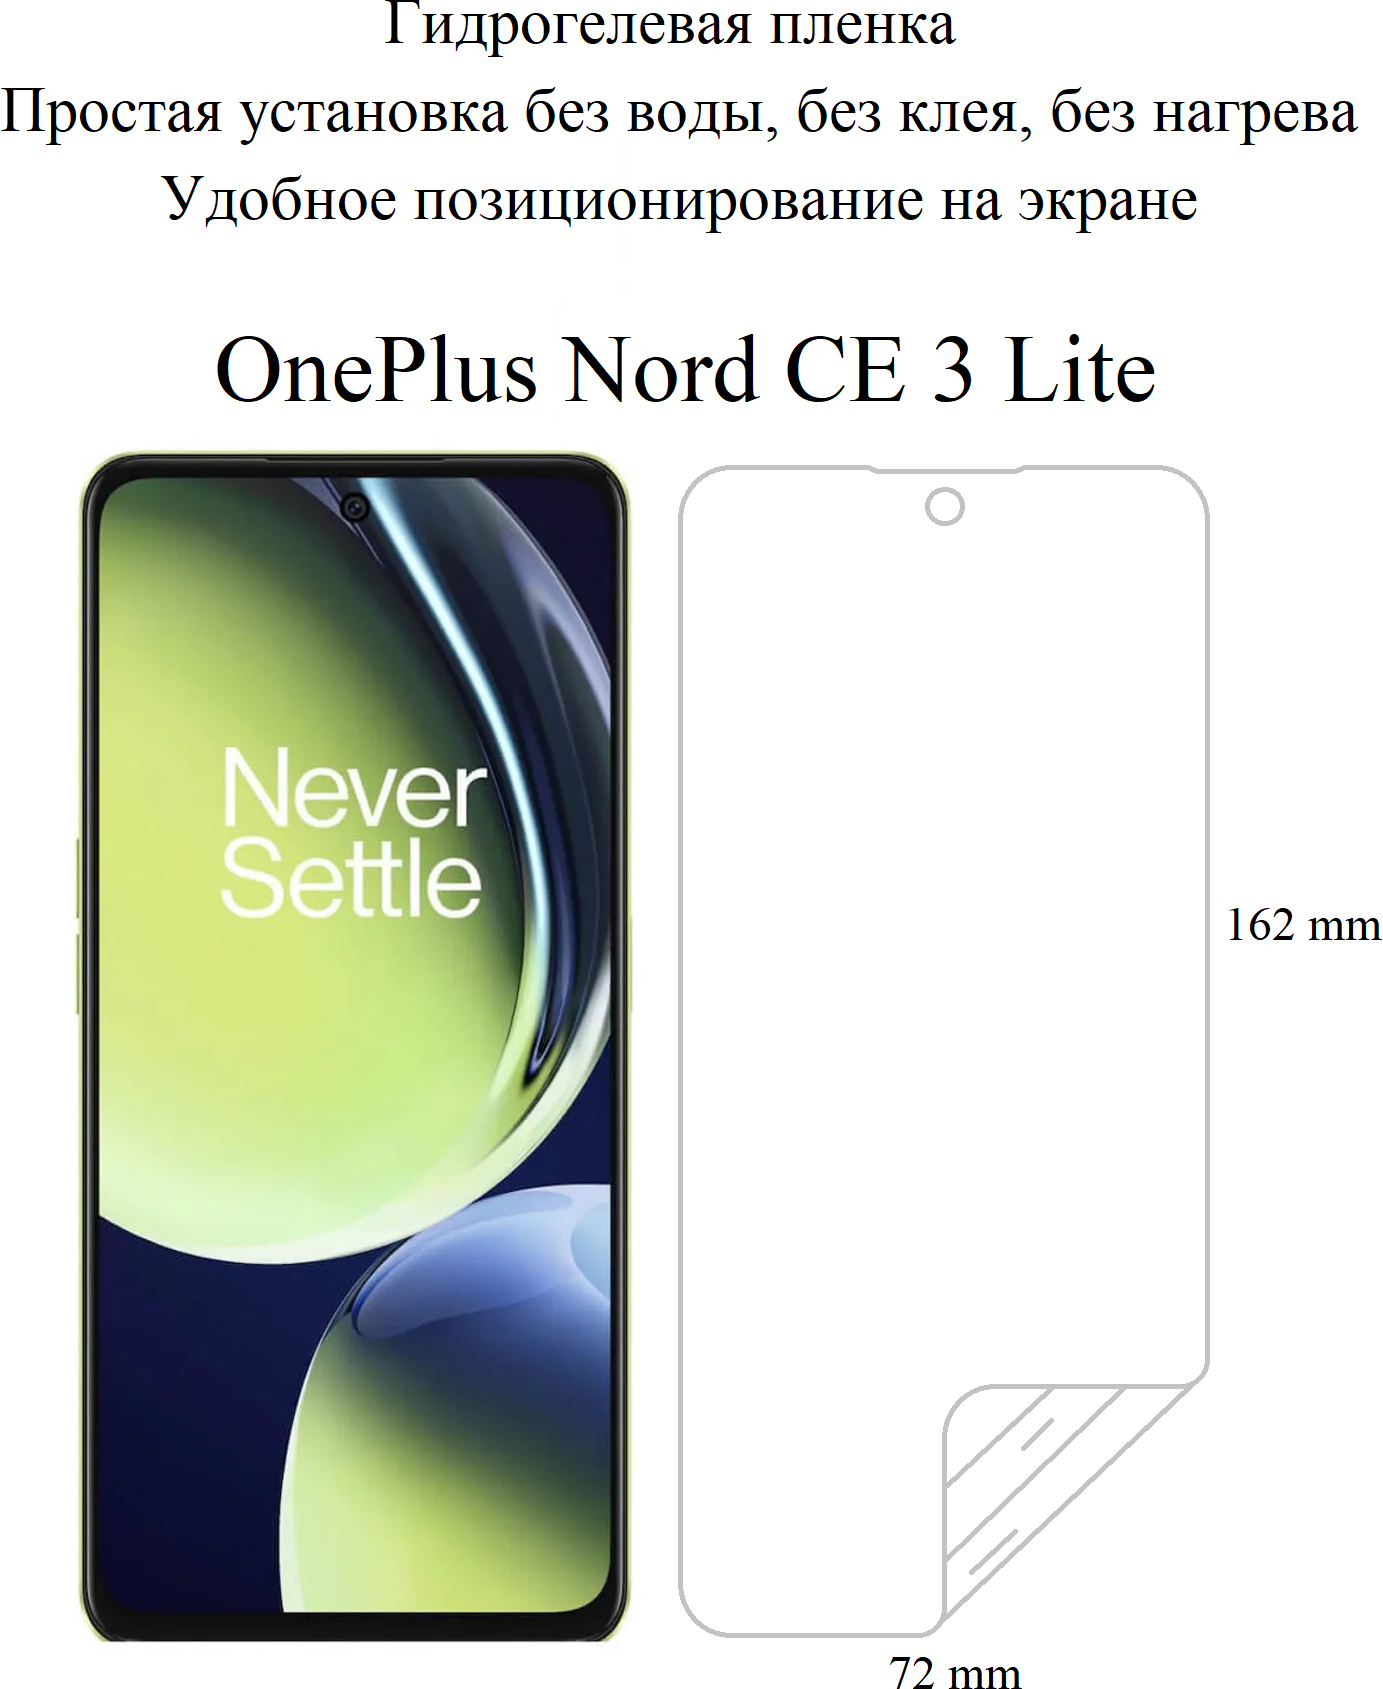 Матовая гидрогелевая пленка hoco. на экран смартфона OnePlus Nord CE 3 Lite